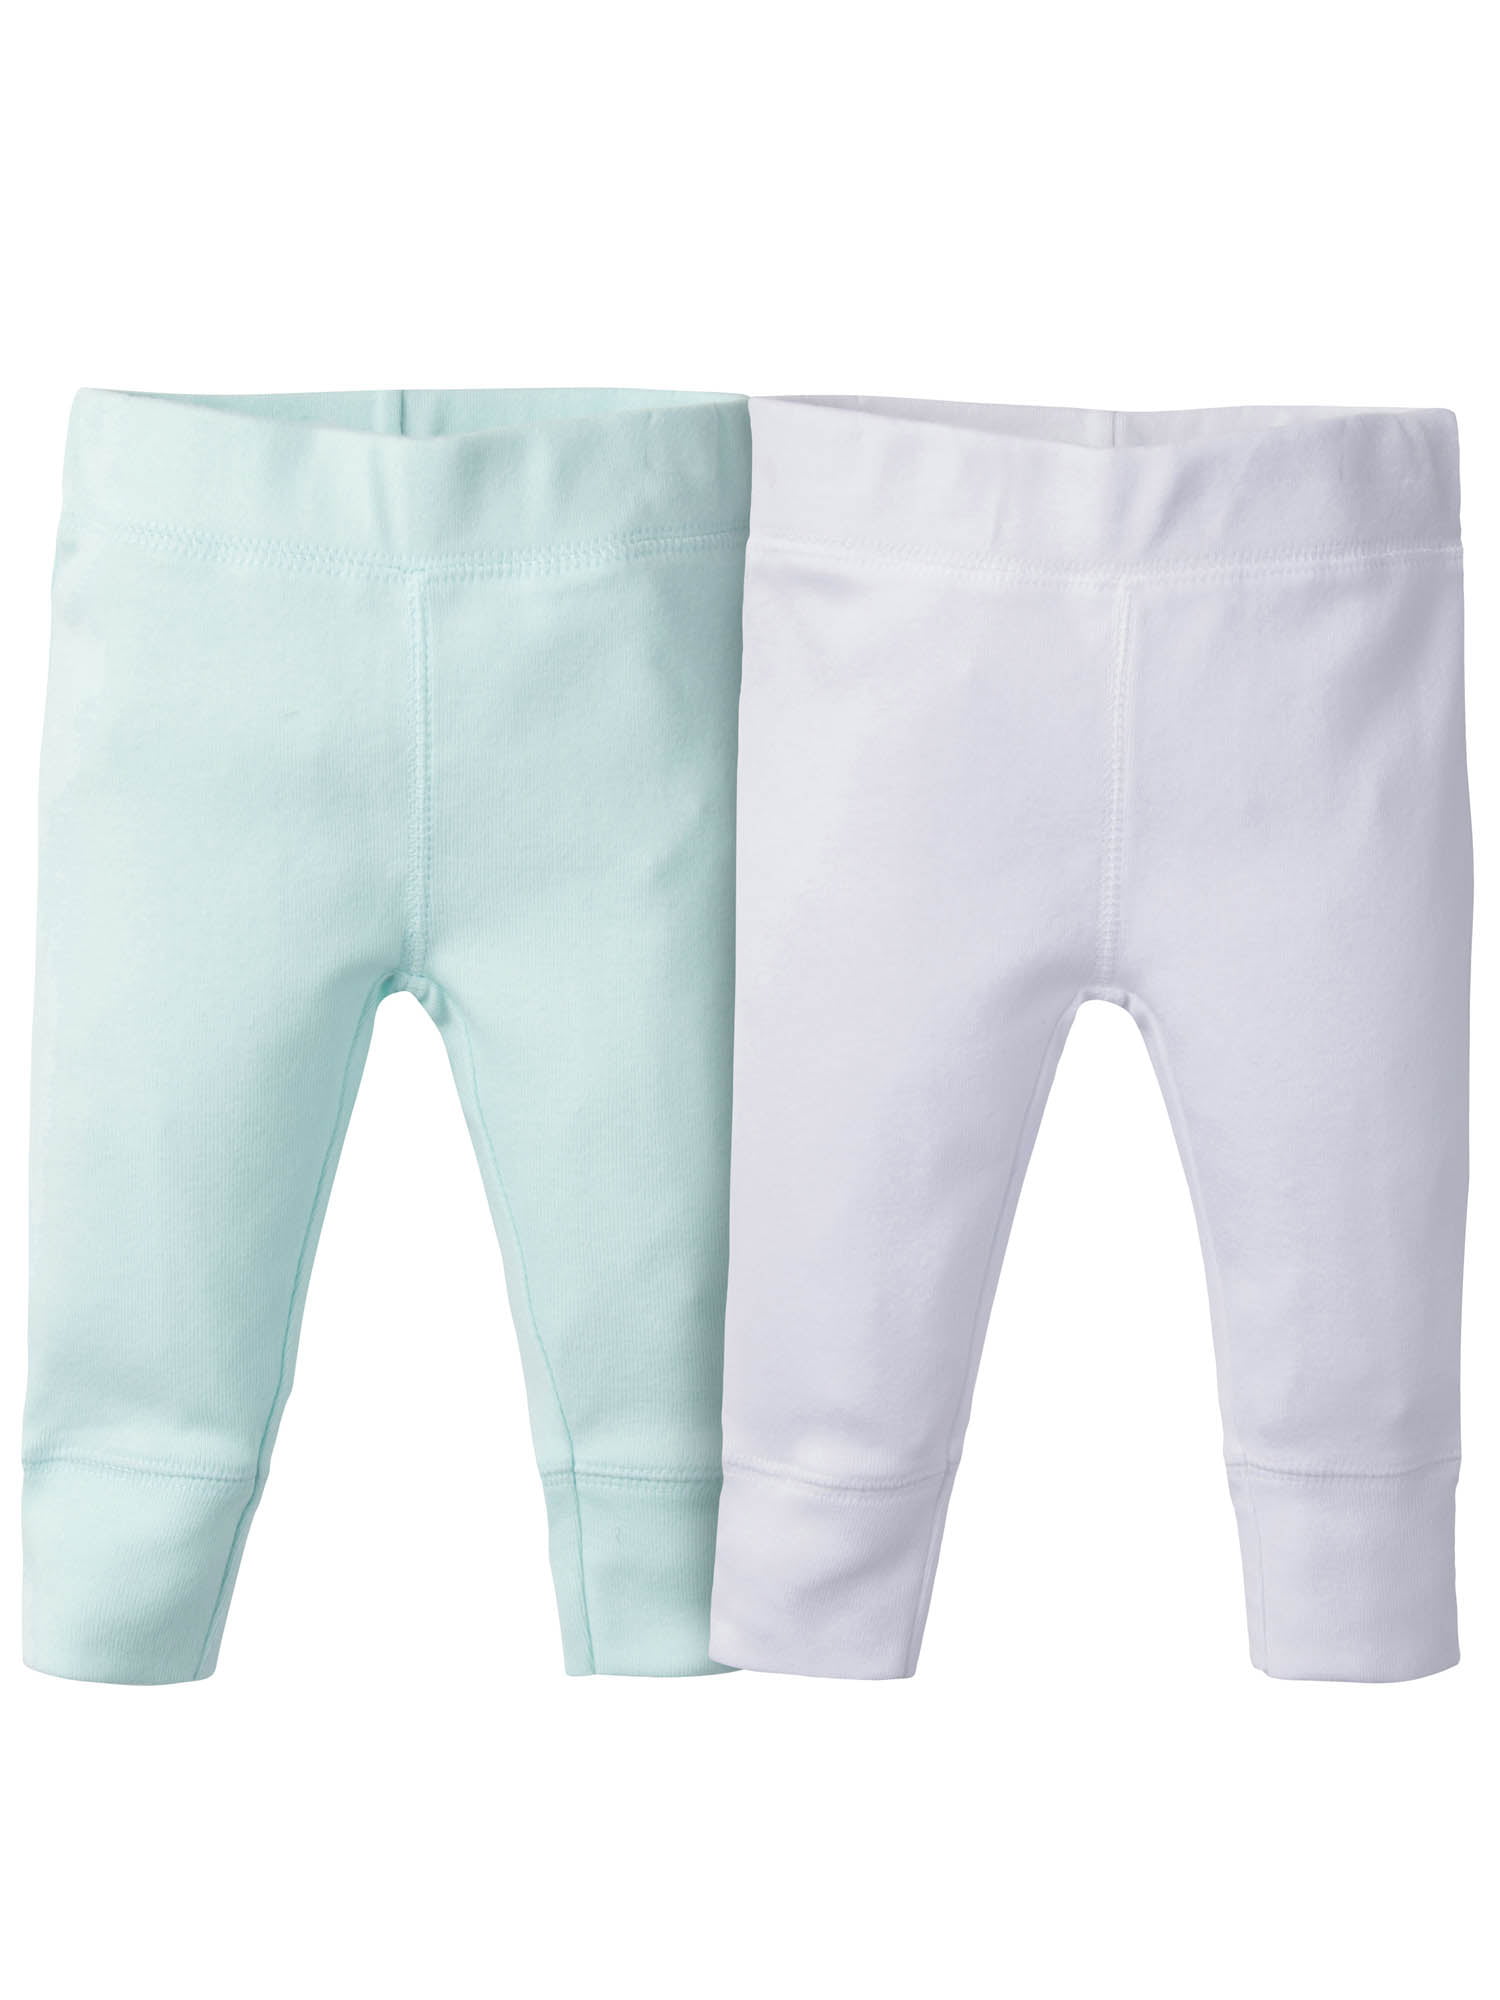 Gerber Baby Boy or Girl Gender Neutral Active Pants, 2-Pack - Walmart.com